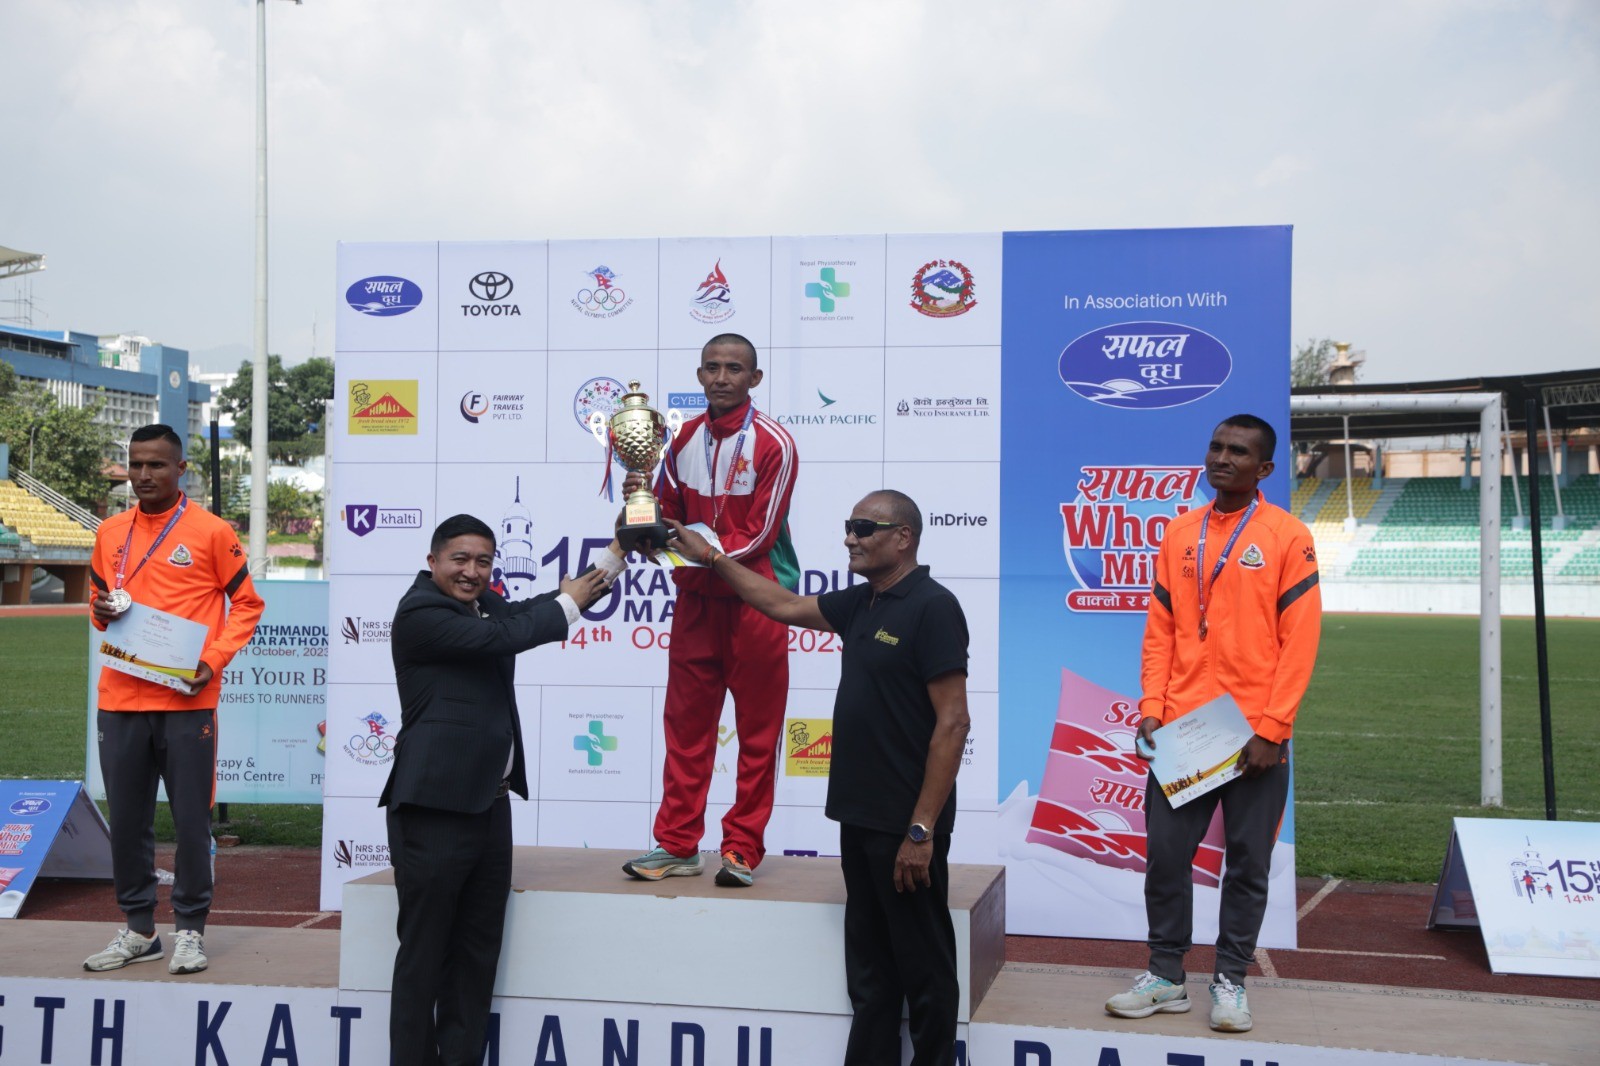 15th Kathmandu Marathon (Winner and Cash Prize)